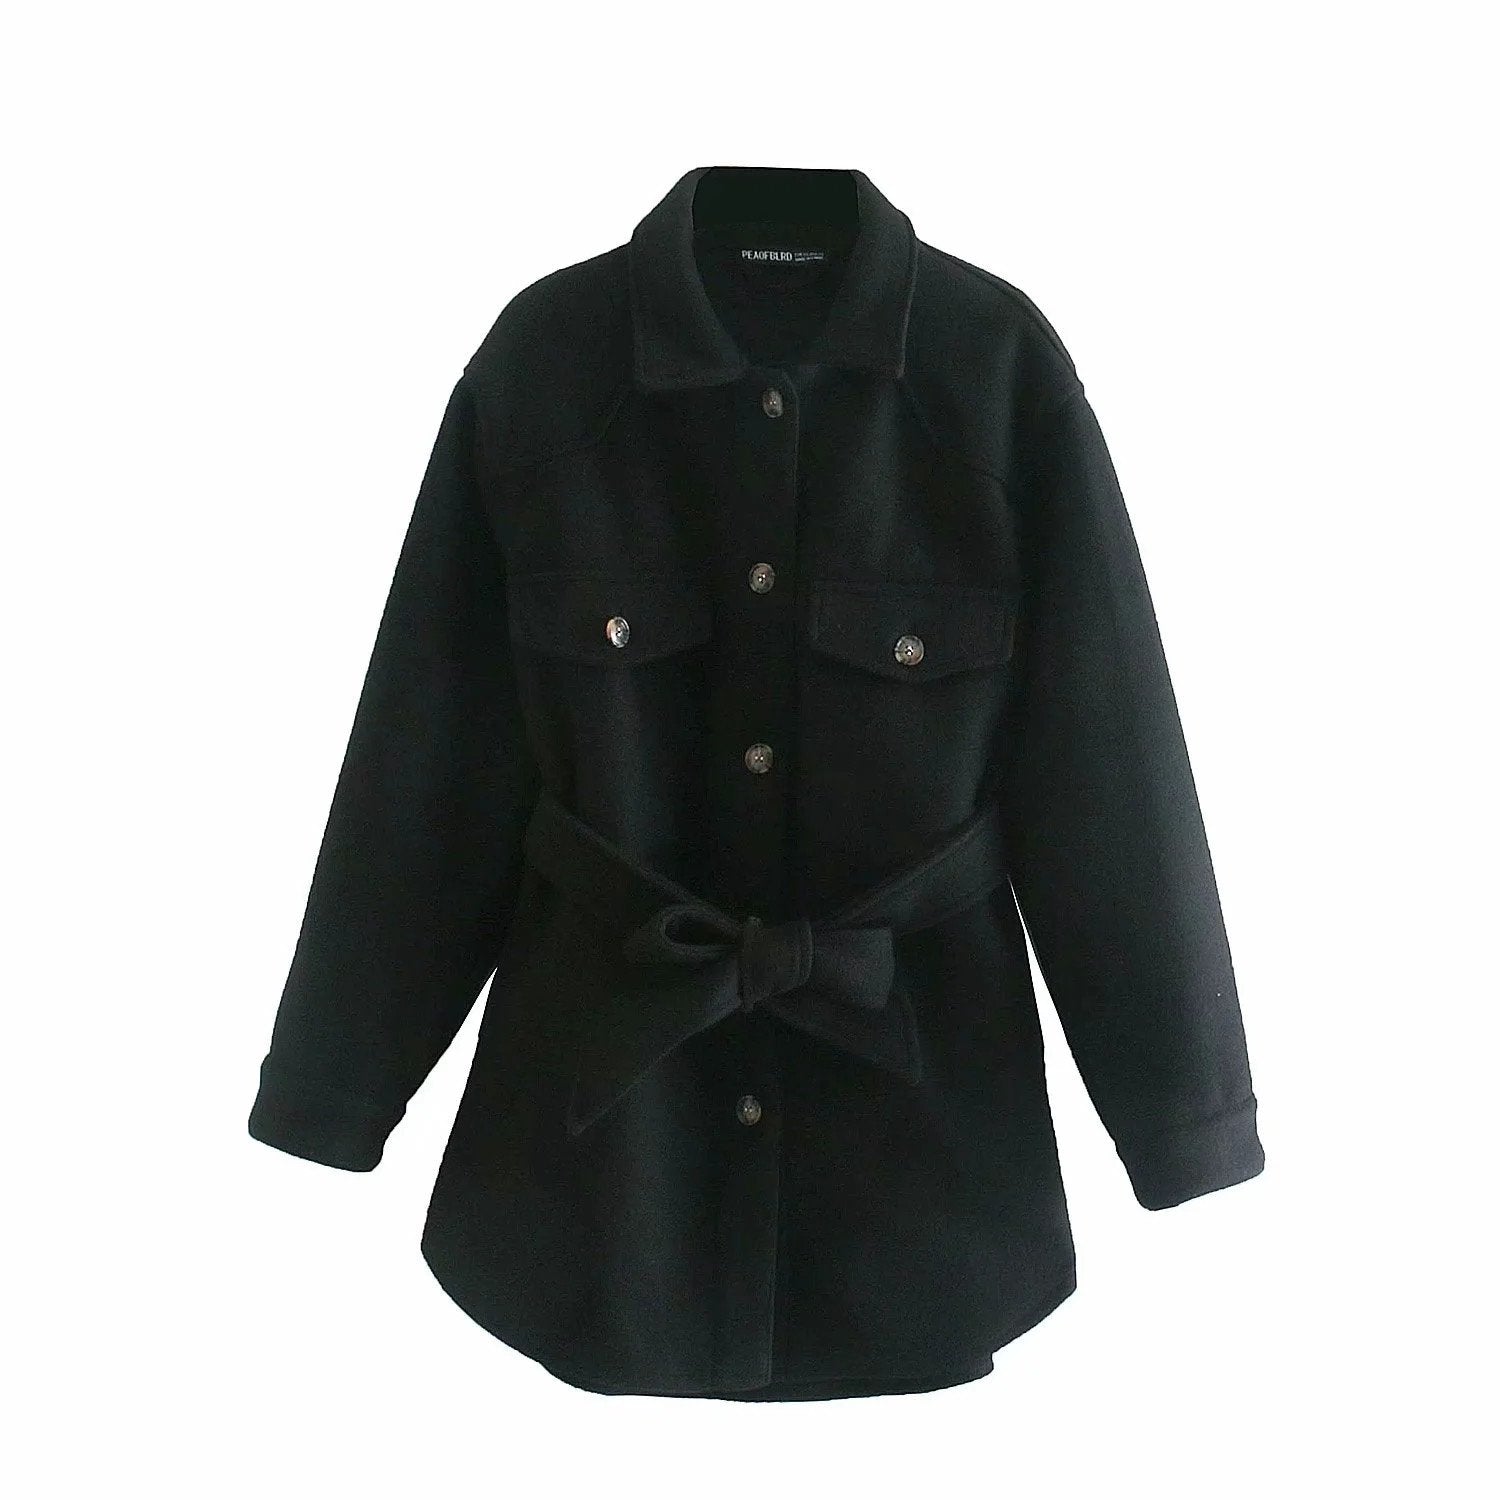 Oversized Workwear Utility Blend Wool Shacket Overshirt with Waist Tie Shirt Jacket on sale - SOUISEE